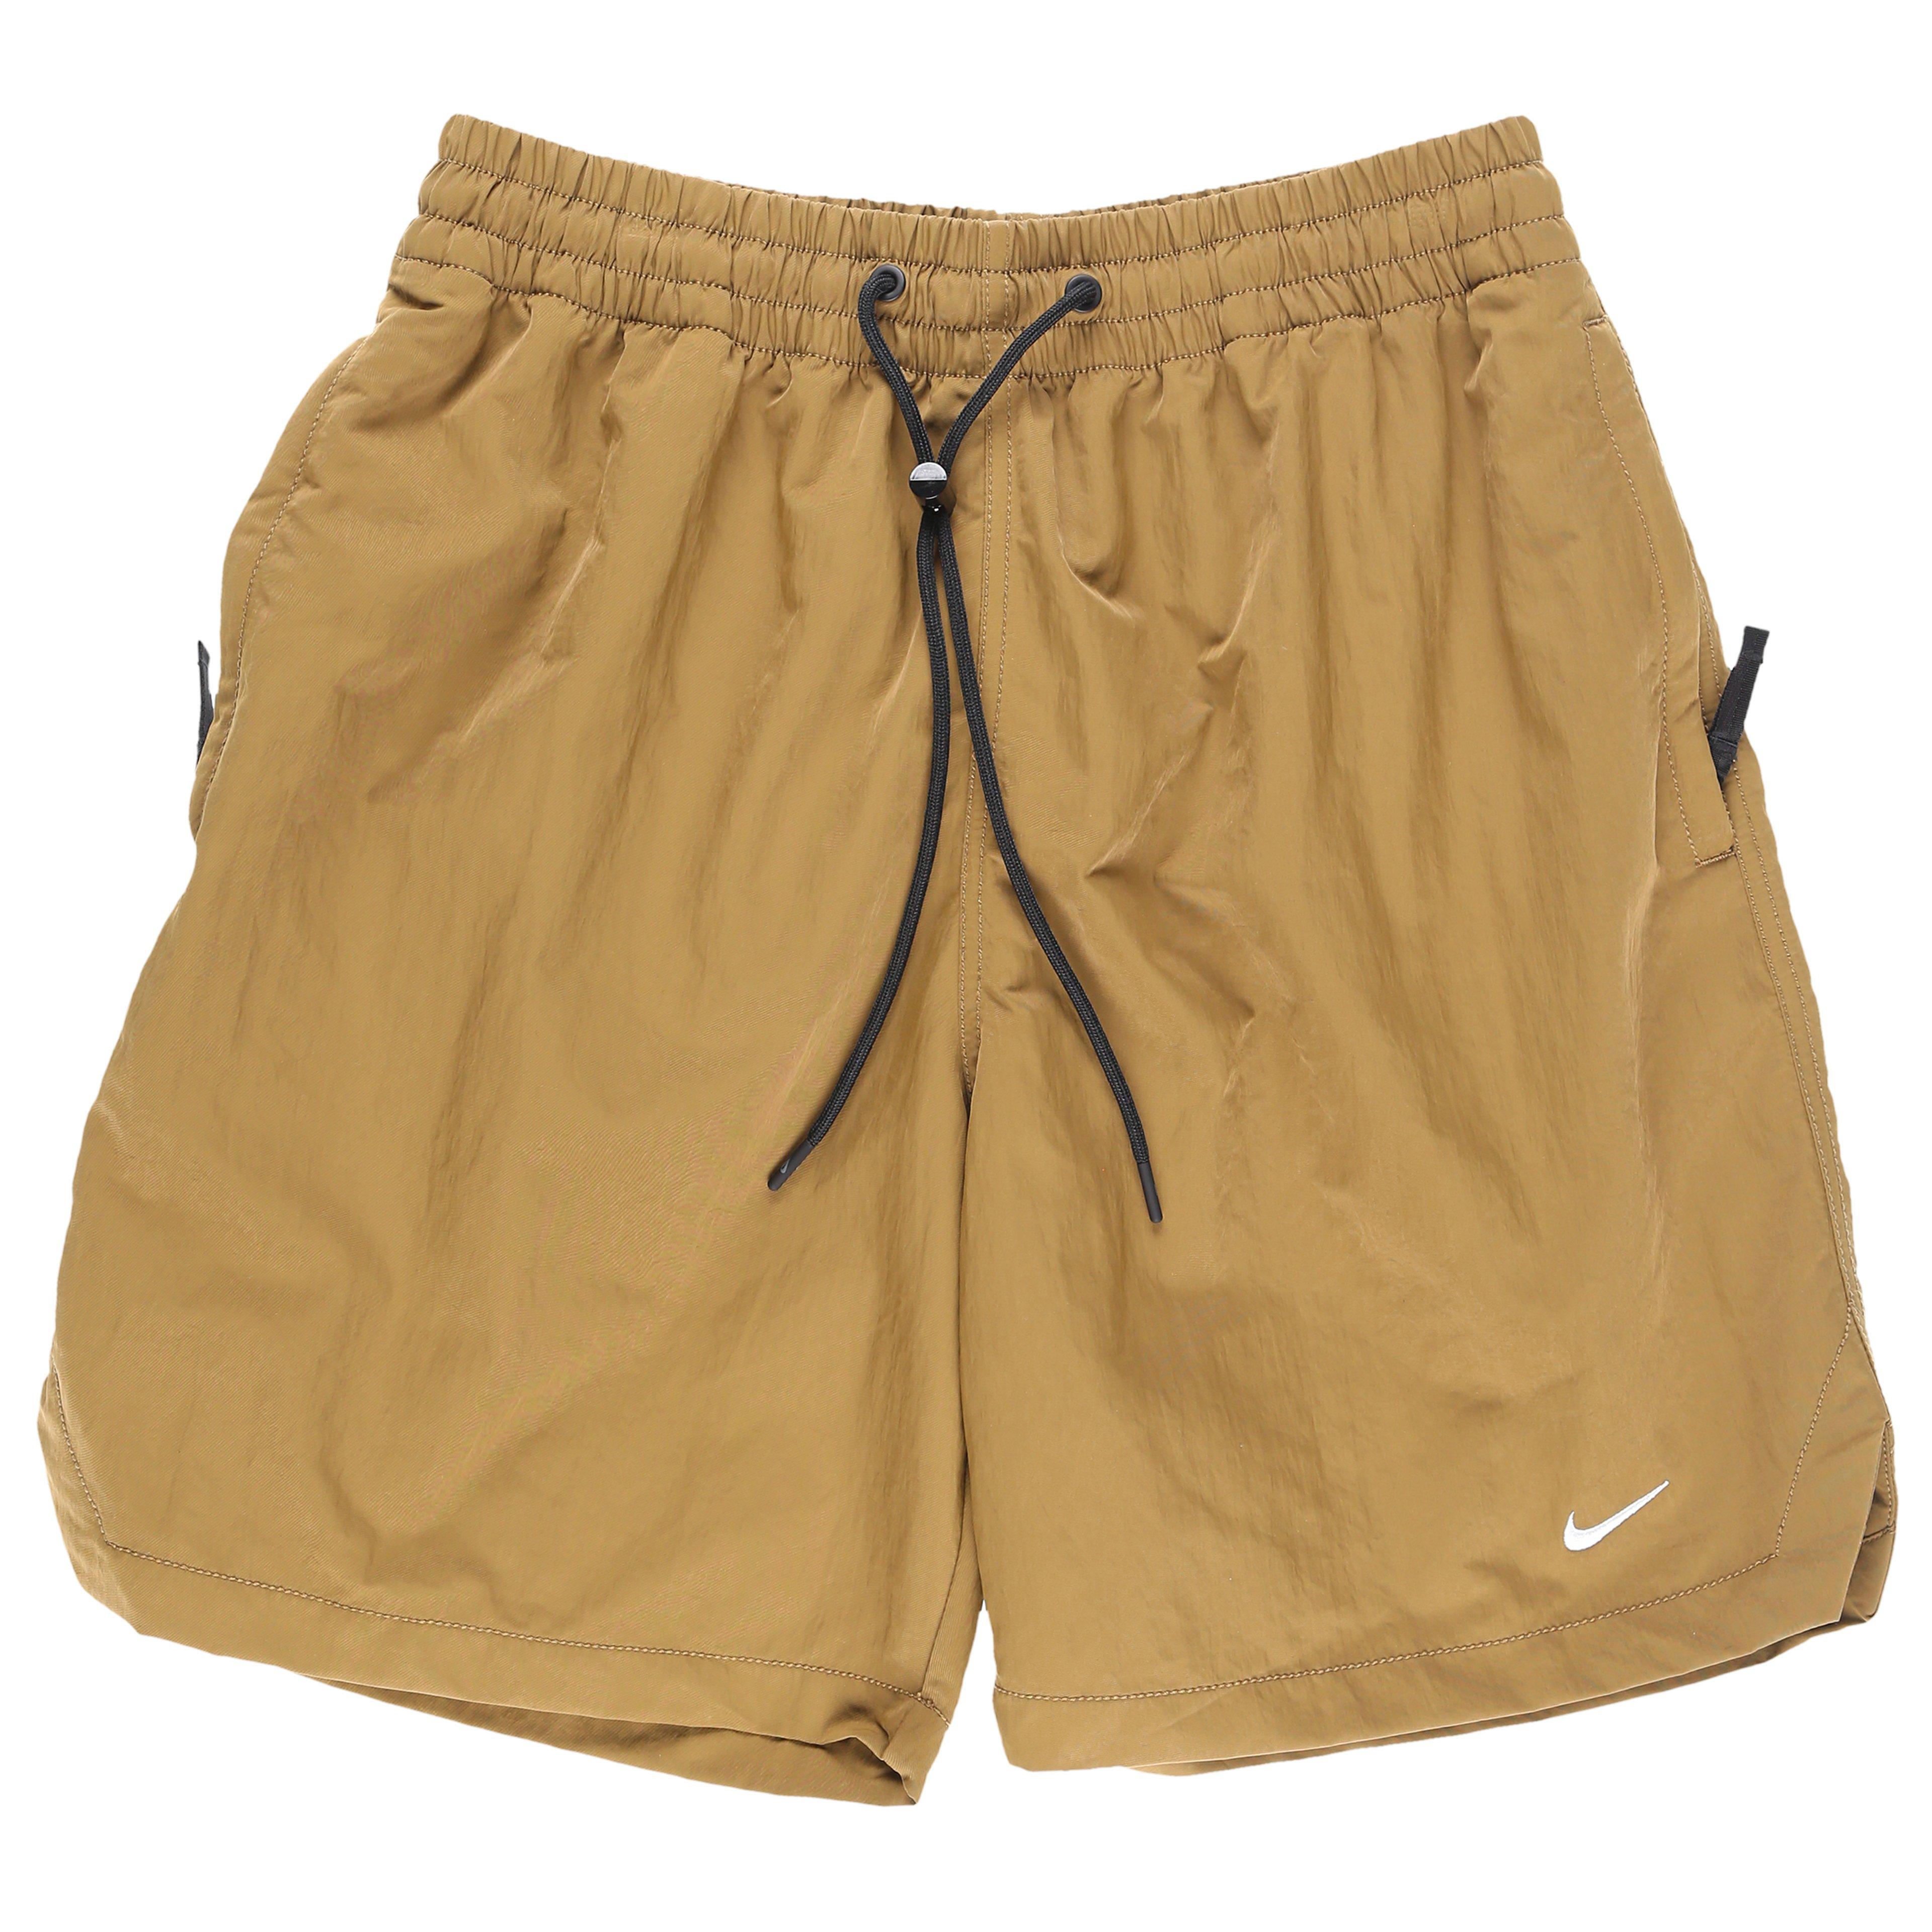 Nike Nrg Shorts in Natural for Men - Lyst